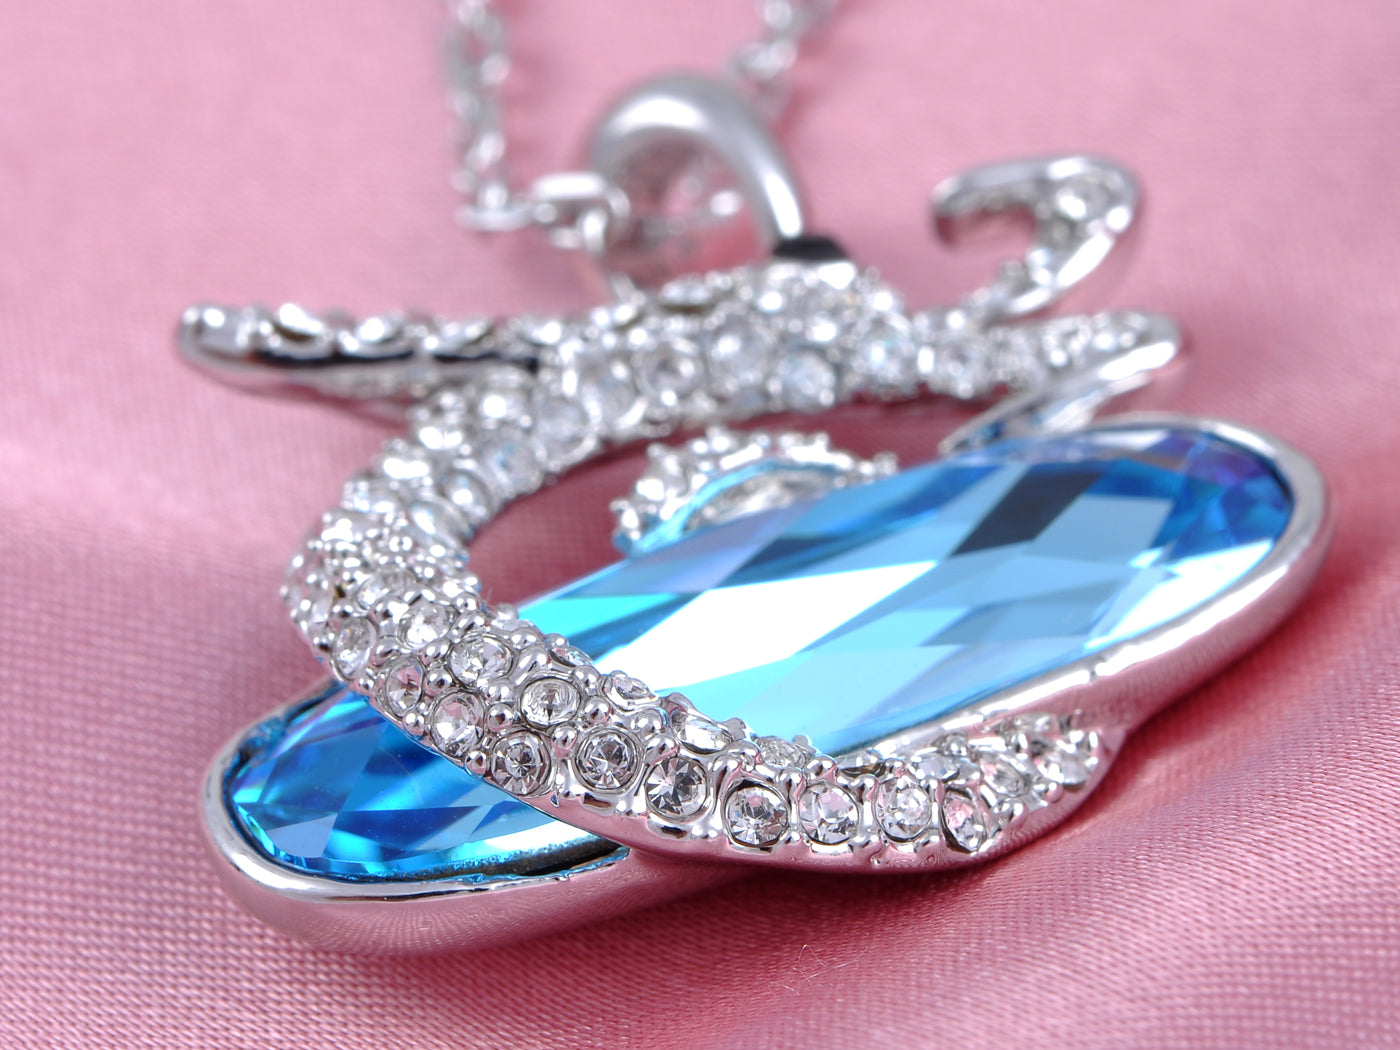 Swarovski Crystal Encrusted Dragon Clutches Oval Aquamarine Blue Pendant